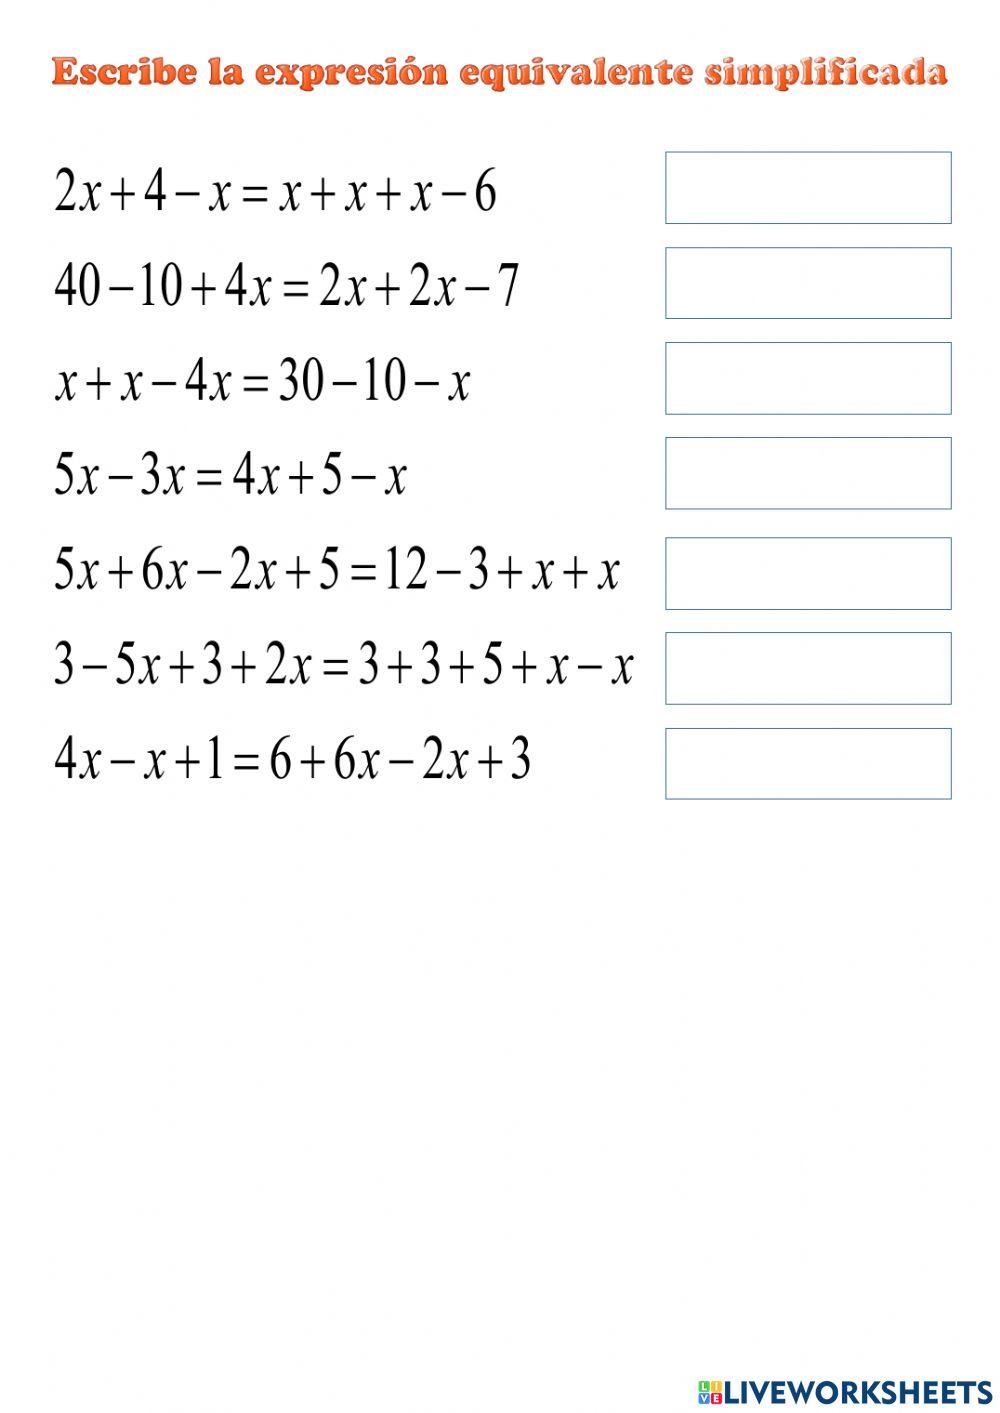 Ficha 4 algebra